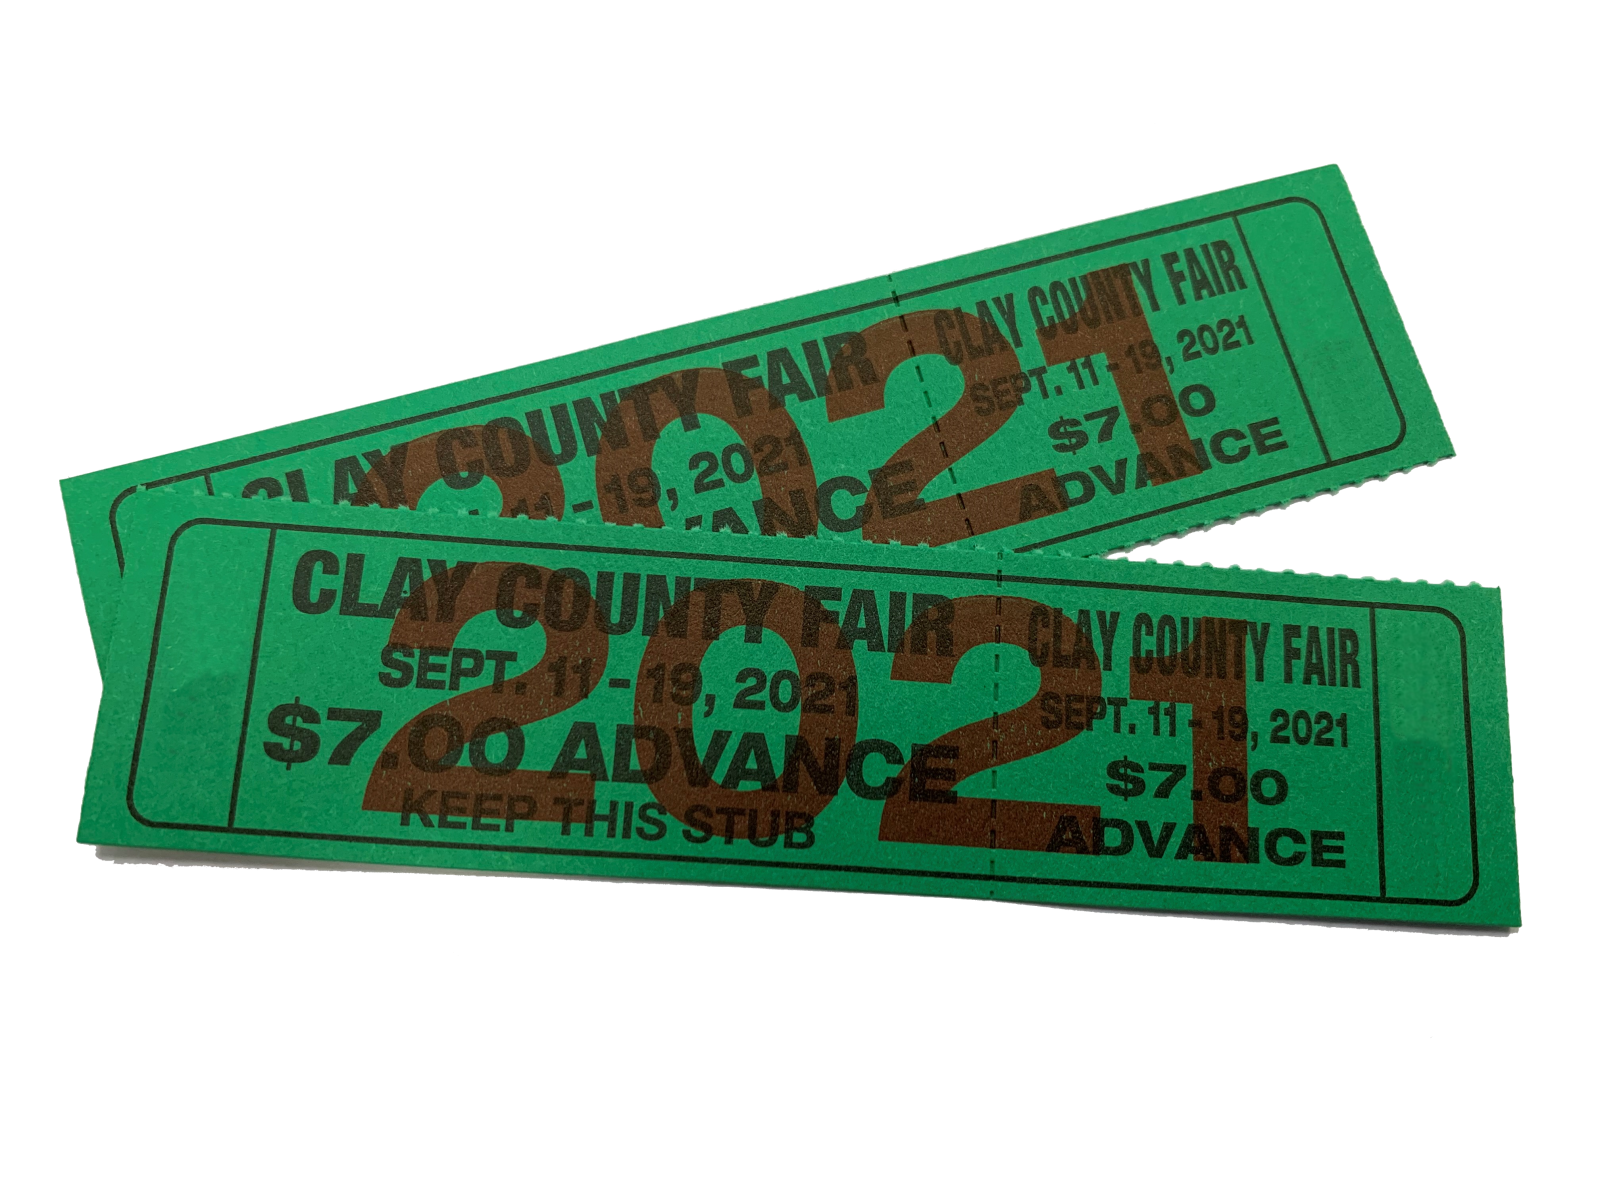 Clay County Fair Tickets